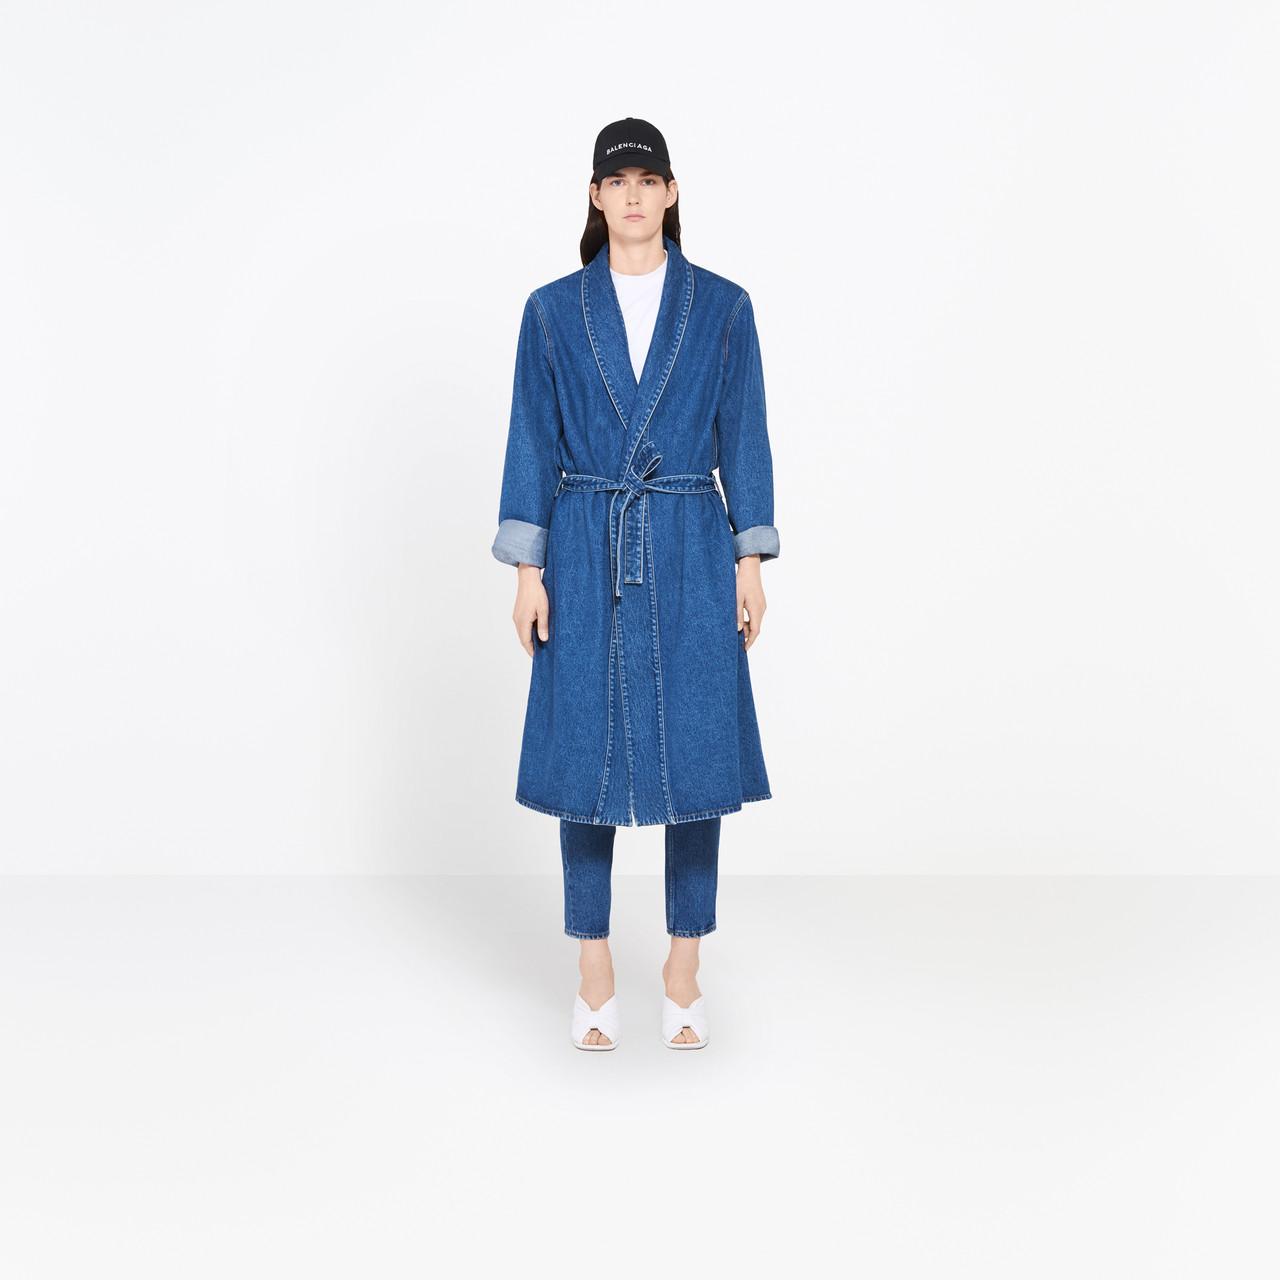 Balenciaga Denim Robe Coat in Stonewash (Blue) - Lyst